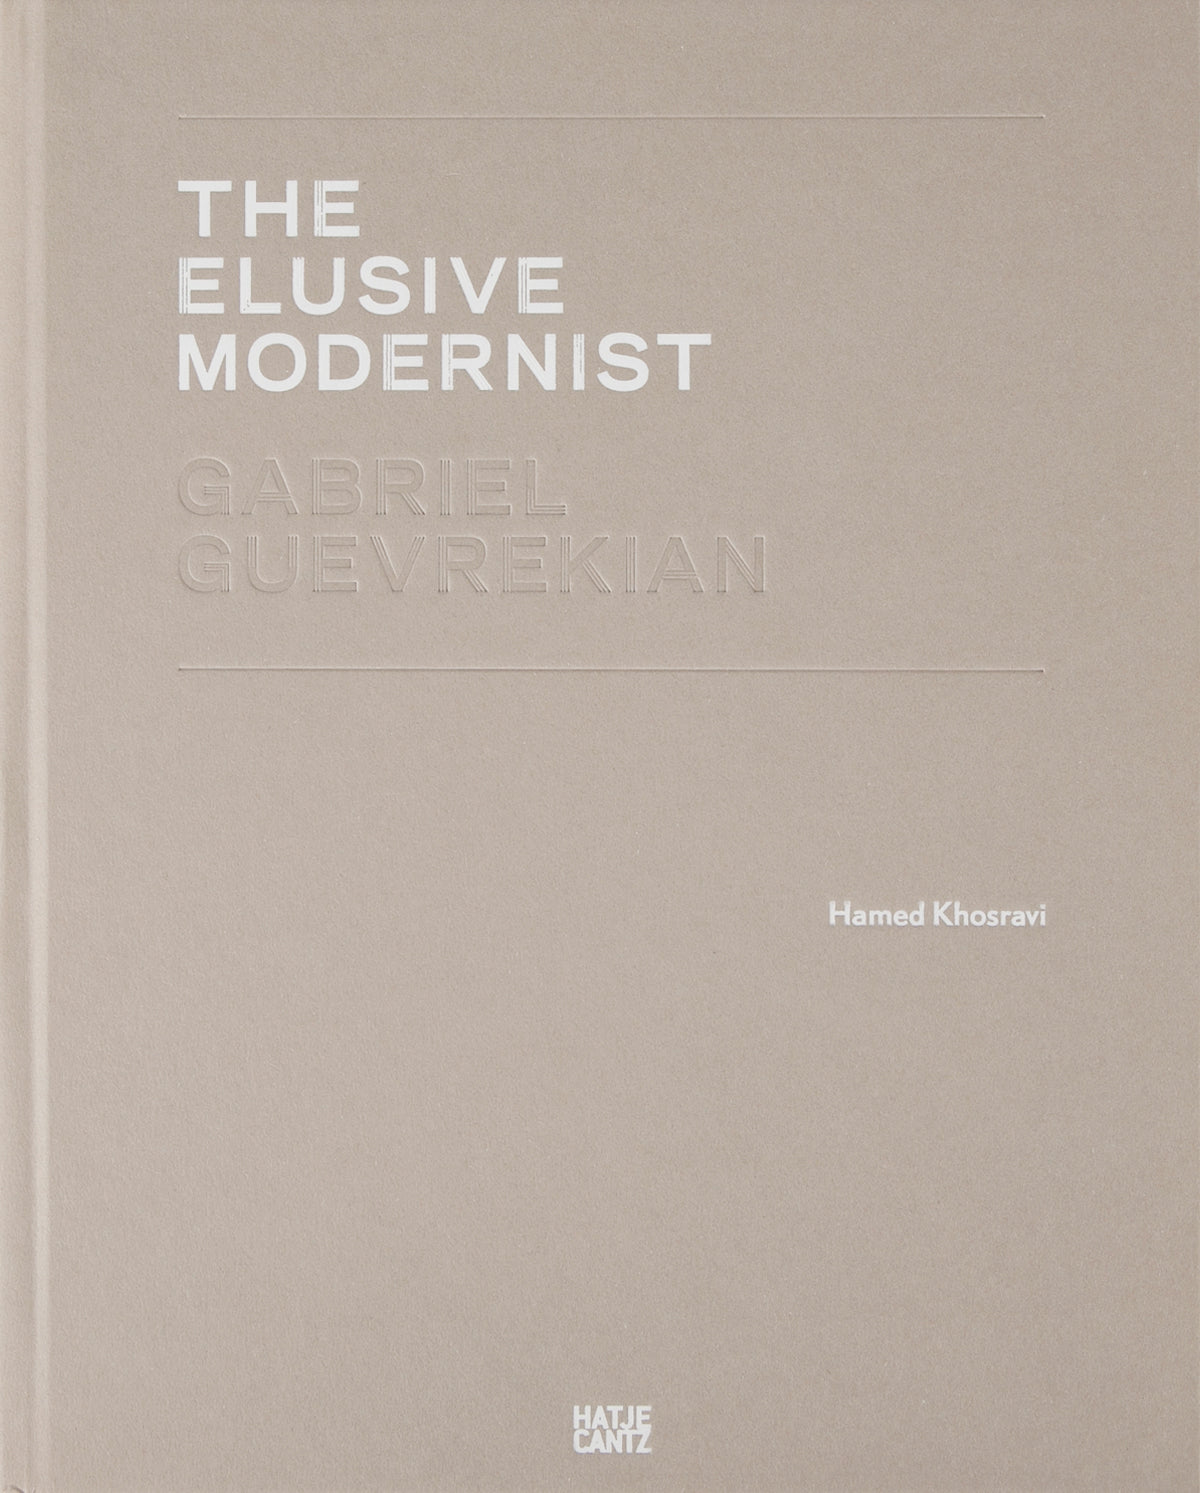 The Elusive Modernist